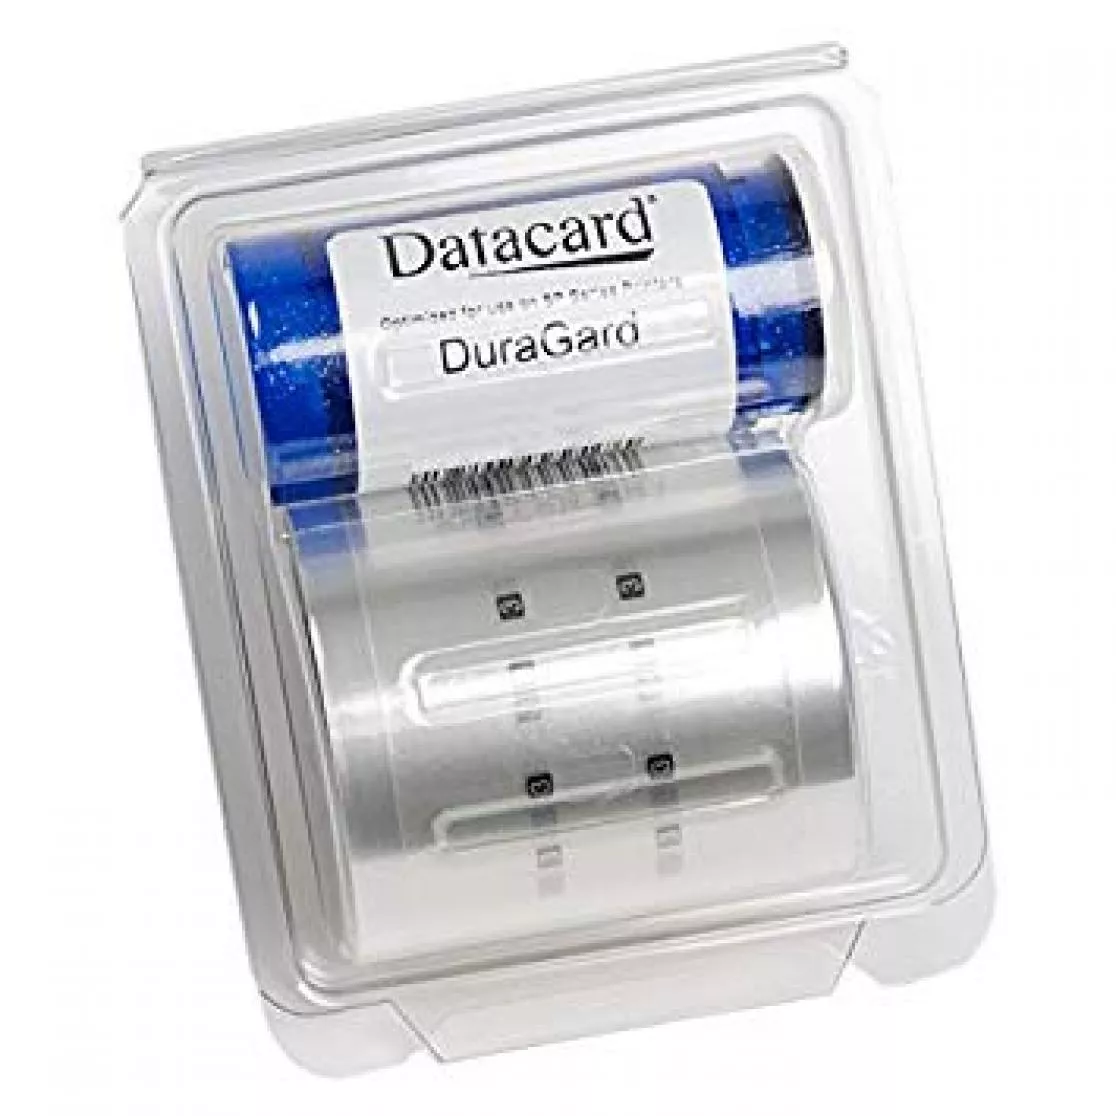 Laminate DuraGard Crest Magnetic Strip for card printer datacard SD460